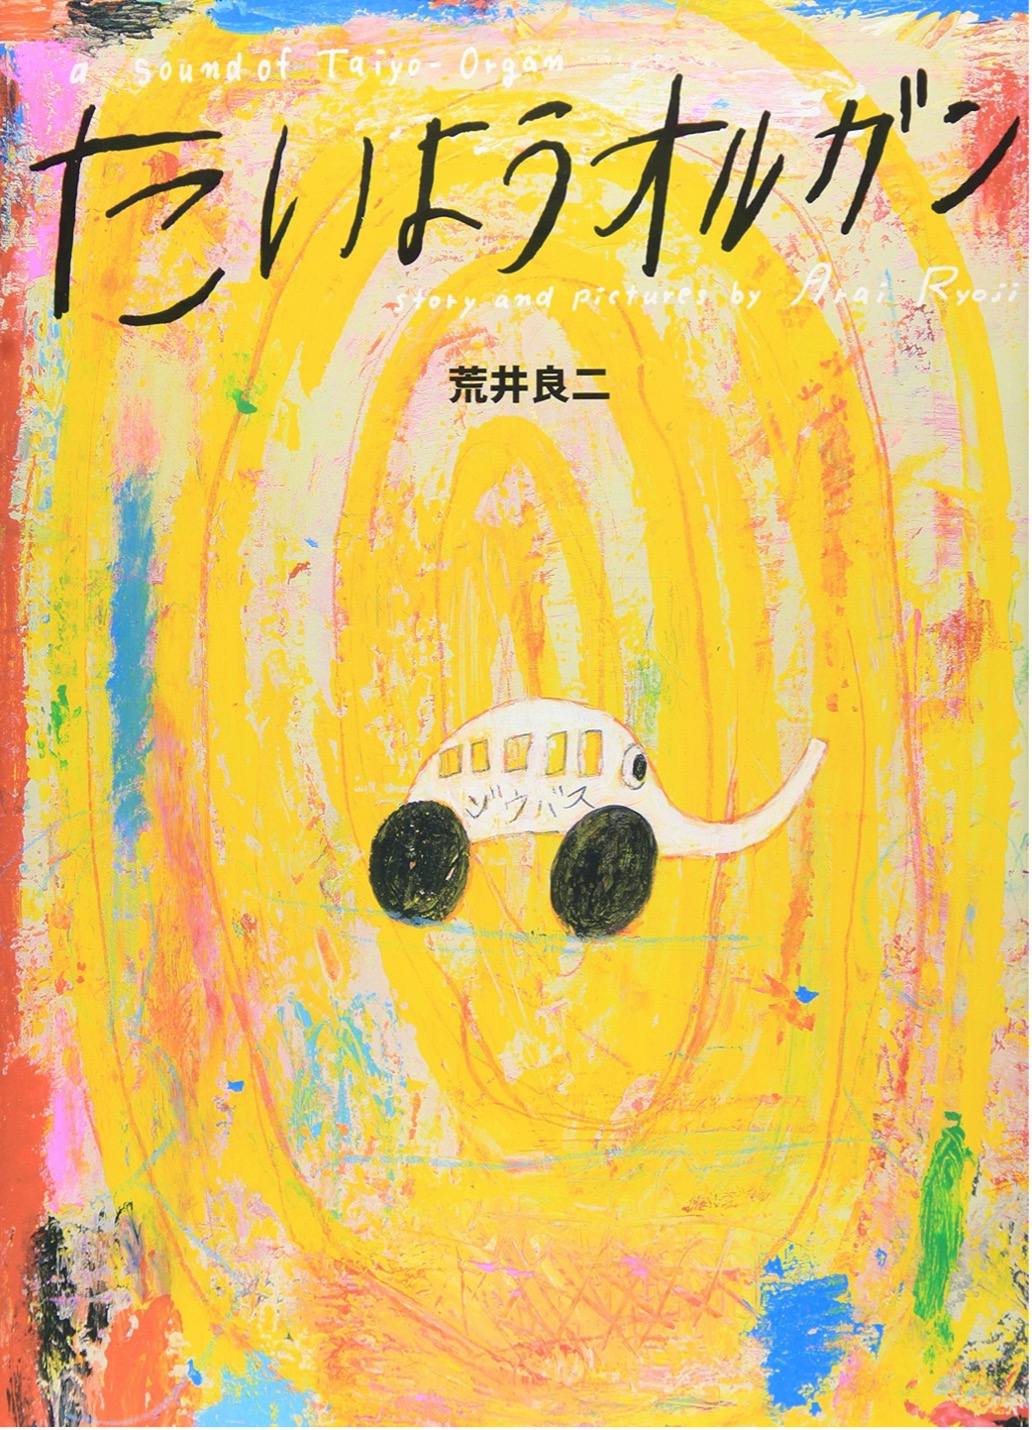 The Sun Organ illustrated by Arai Ryoji (2009)